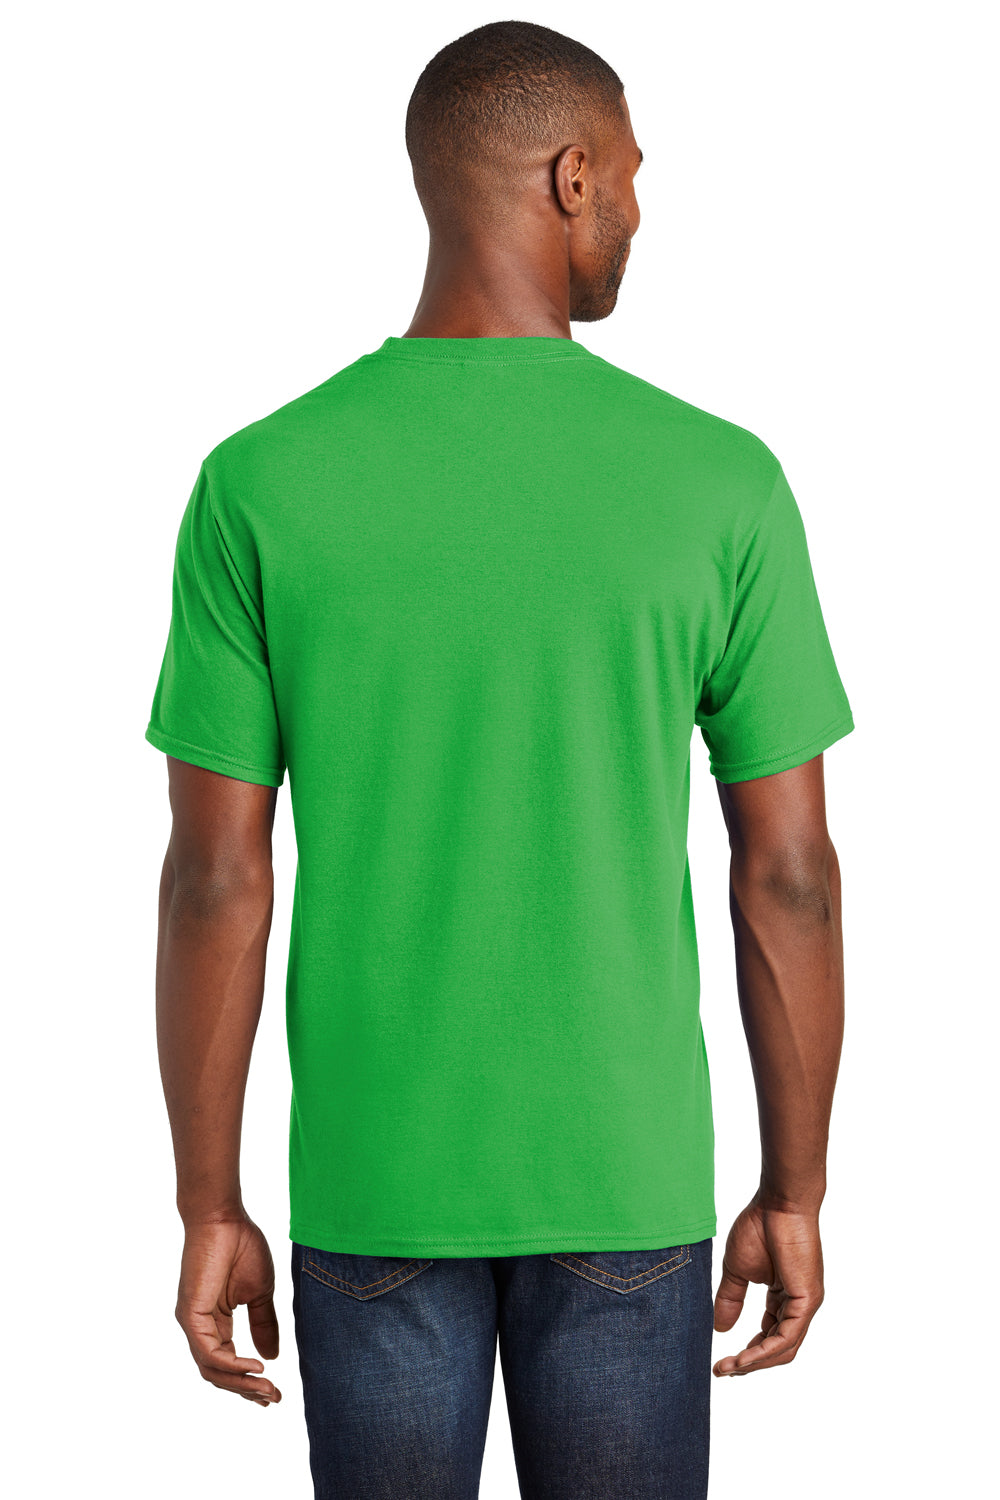 Port & Company PC450 Mens Fan Favorite Short Sleeve Crewneck T-Shirt Kelly Green Back